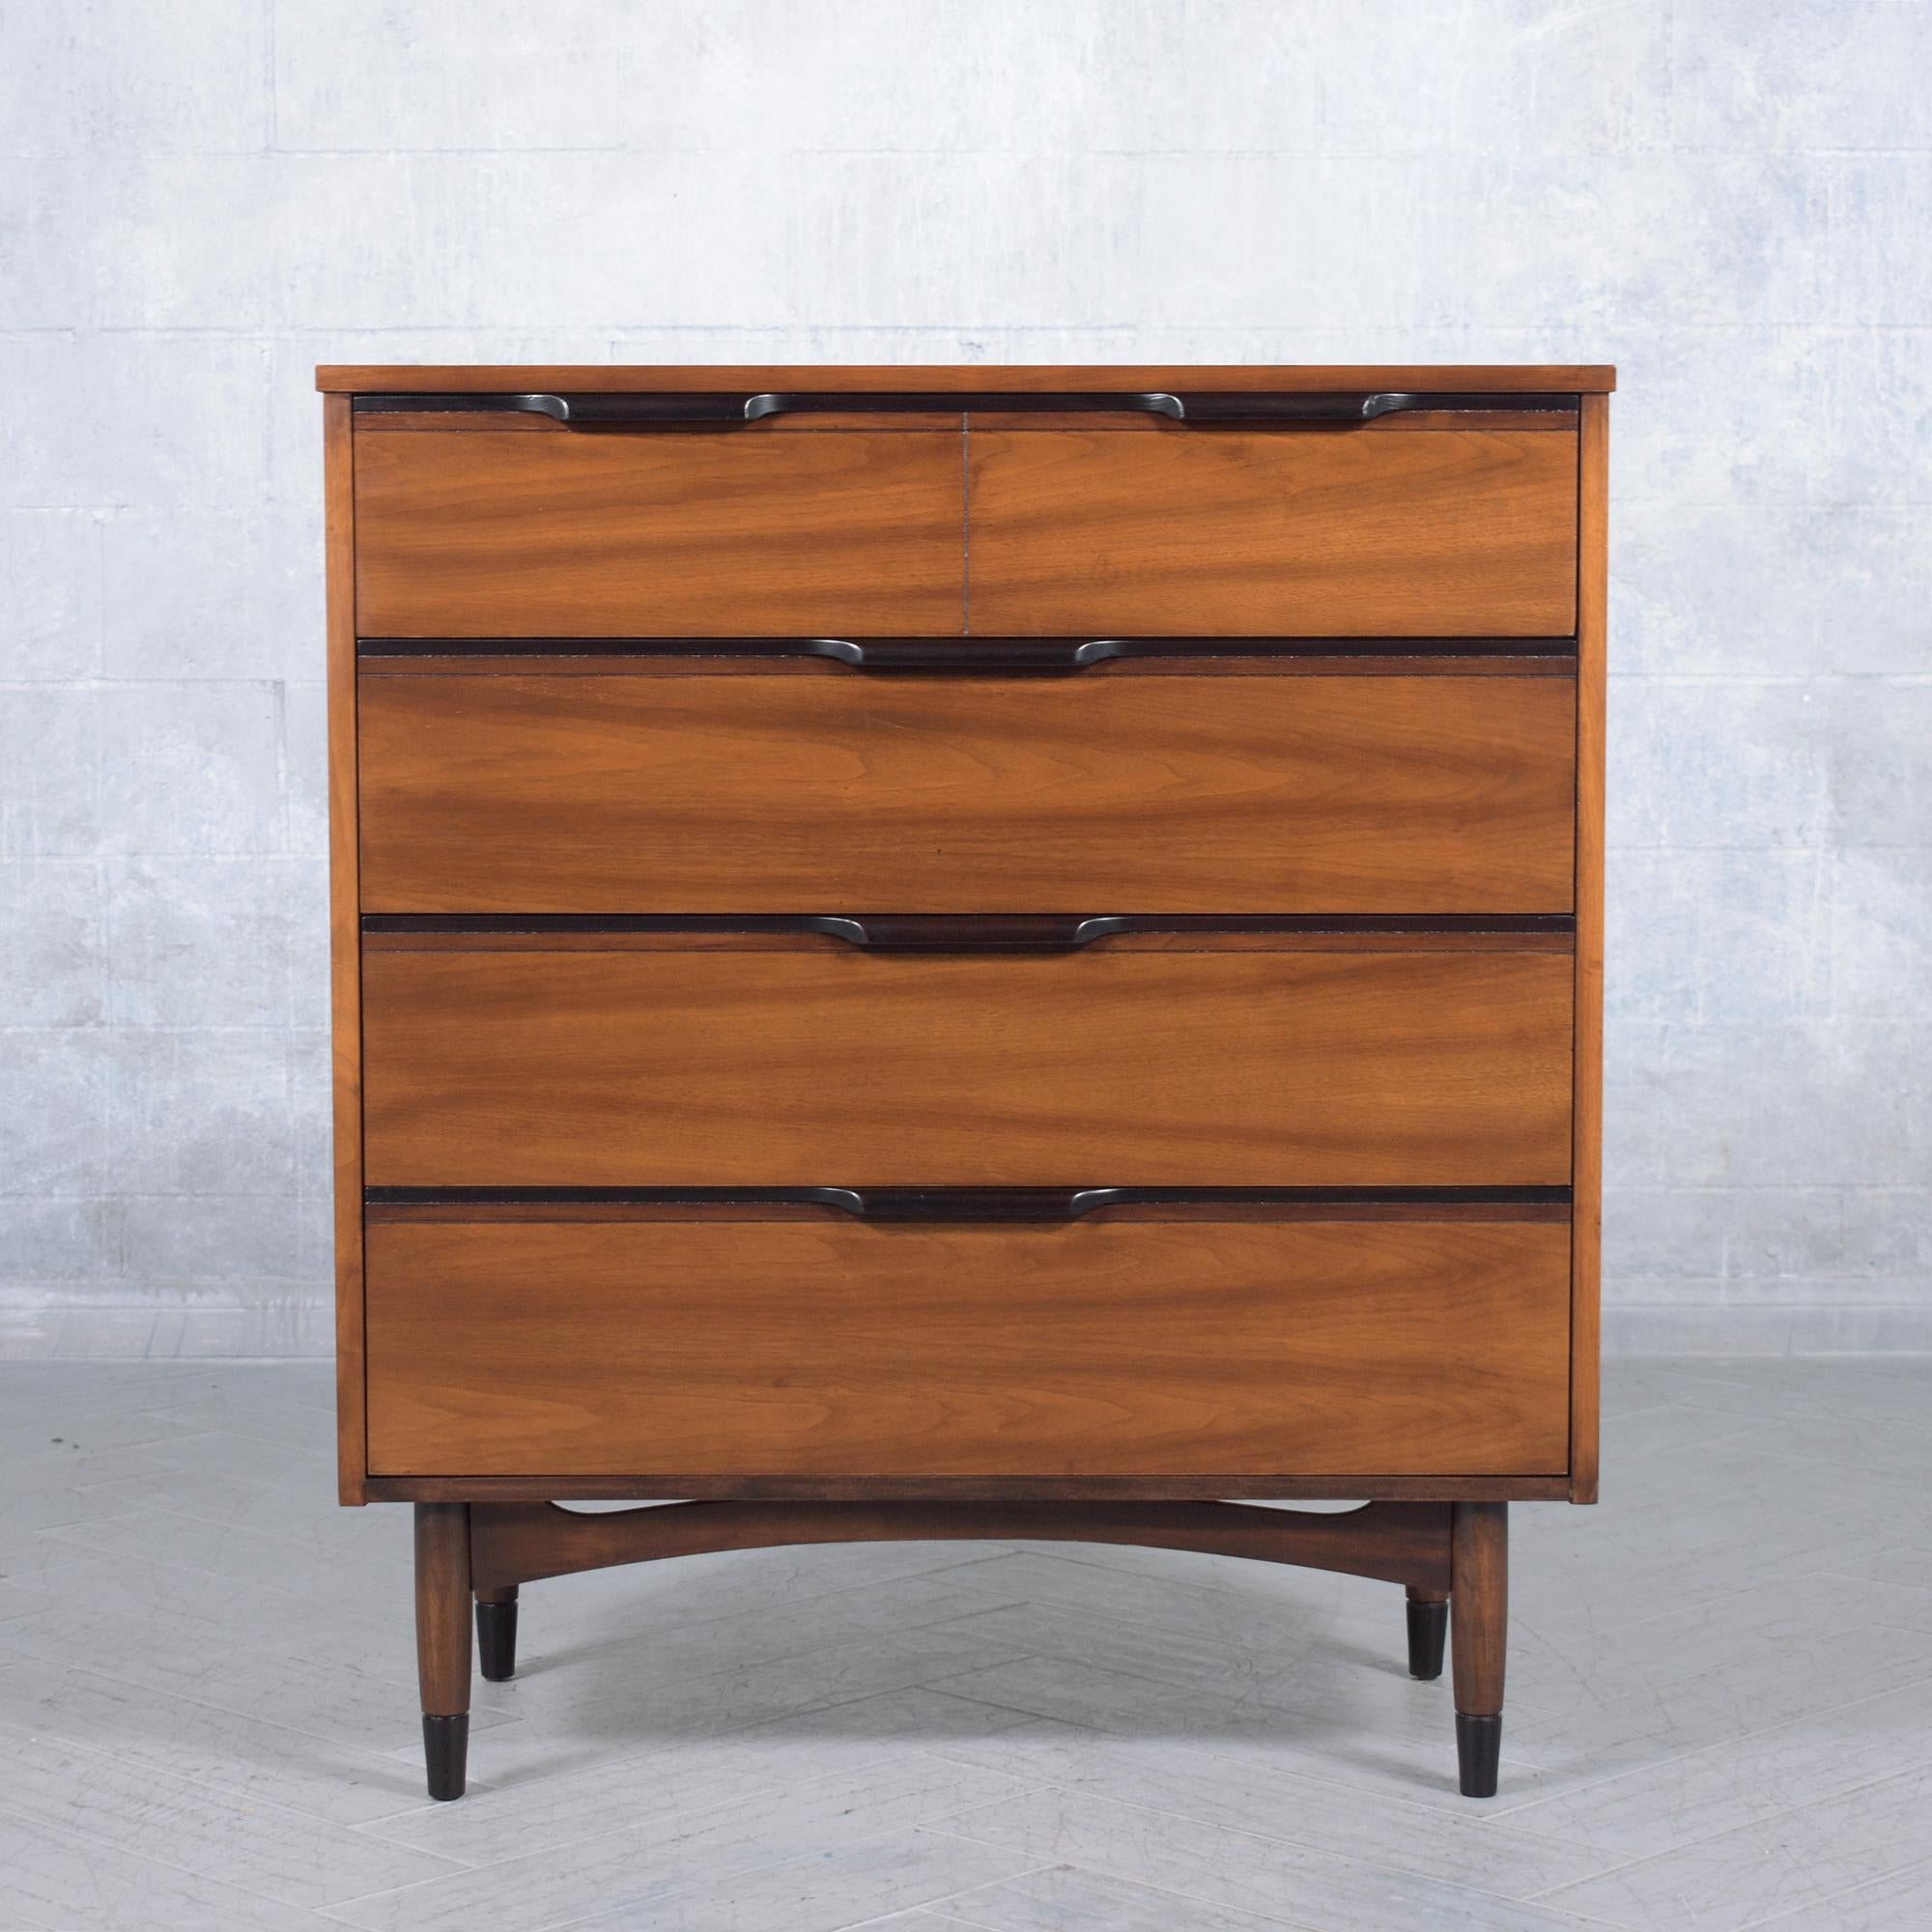 Stained Modern Walnut Dresser Restored: Two-Tone Elegance & Craftsmanship For Sale